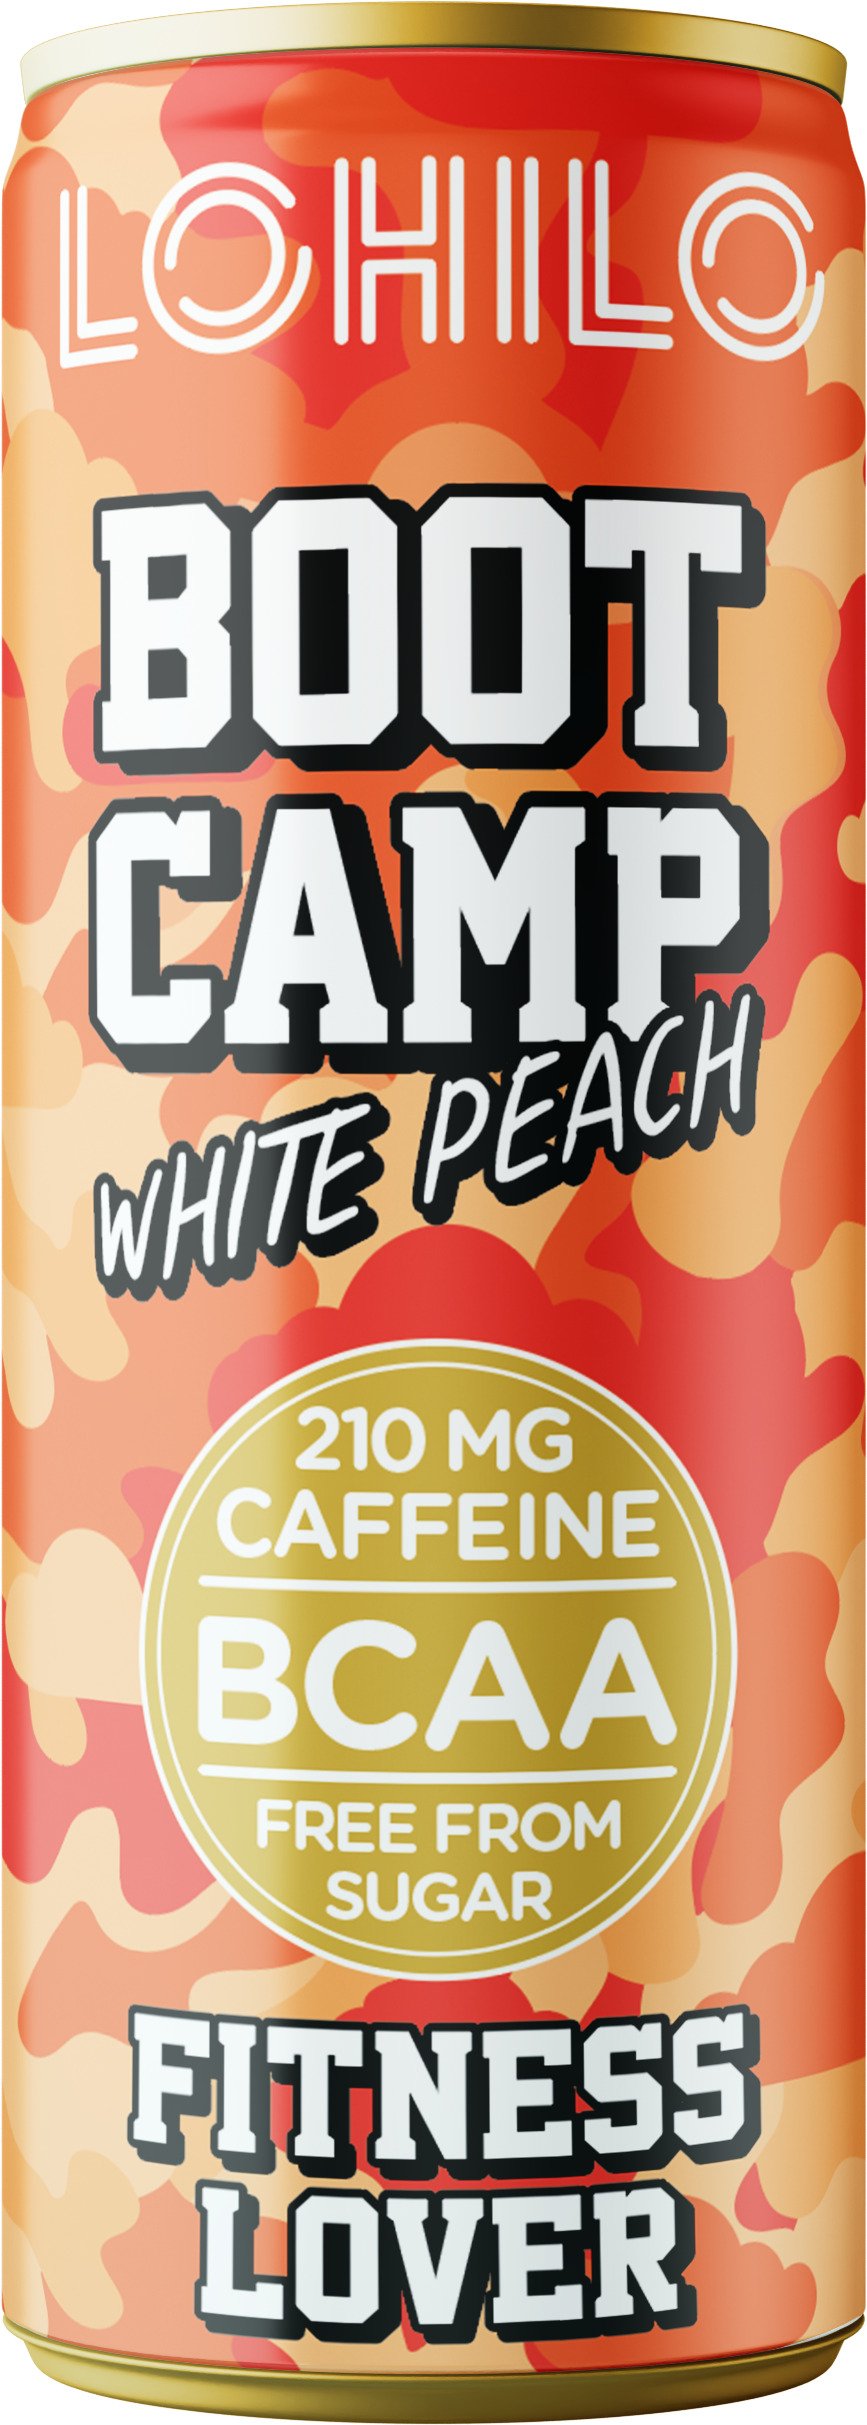 Lohilo Boot Camp BCAA White Peach 330 ml